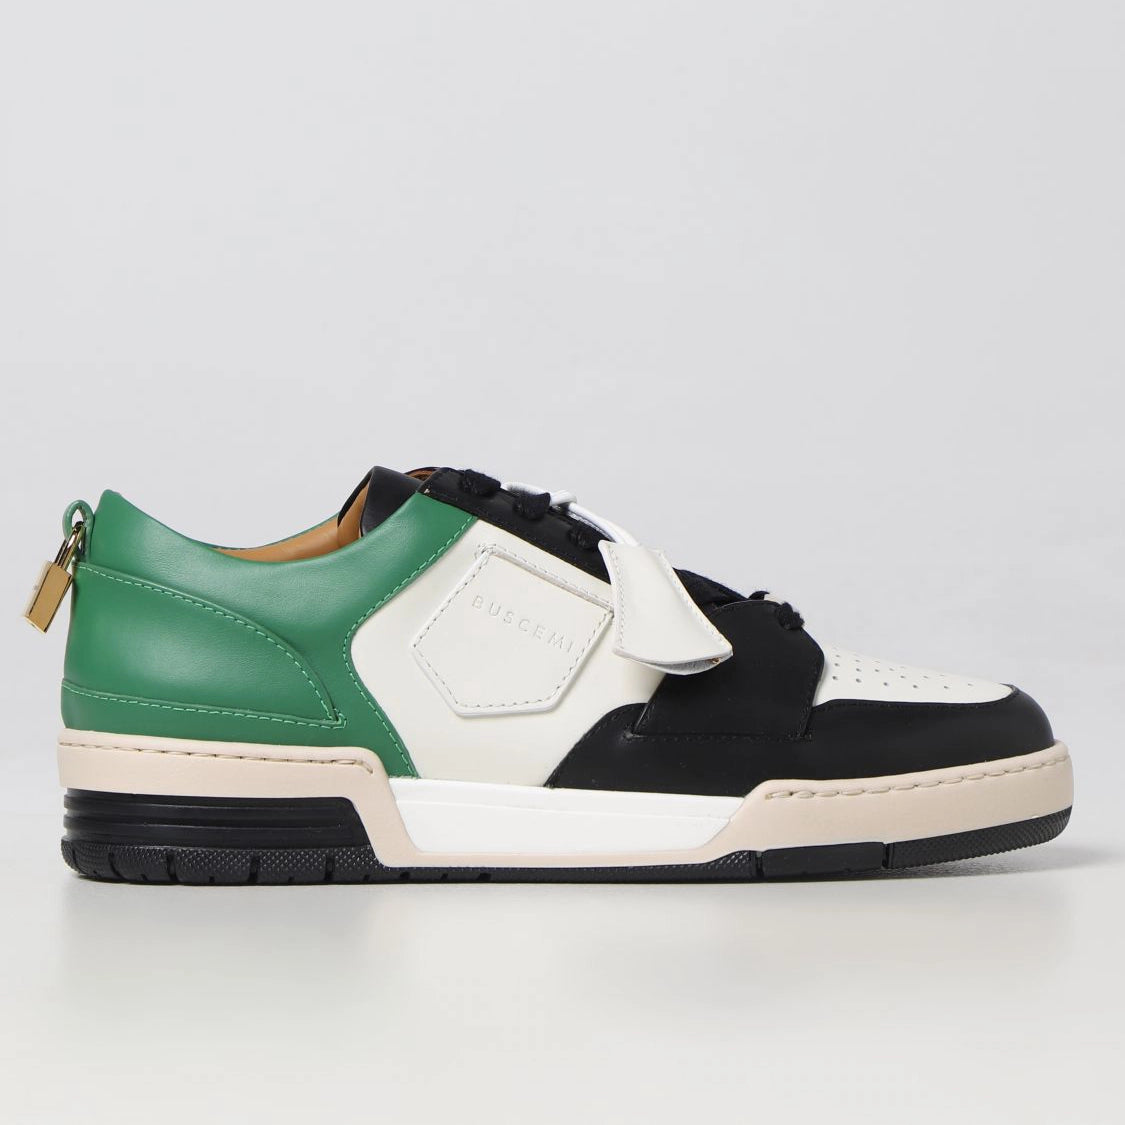 Metro Fusion - Buscemi Air Jon Low Vitello Sneaker - Men’s Shoes BCW22709 / White/Black/Green • L03 / 10 US / 43 It